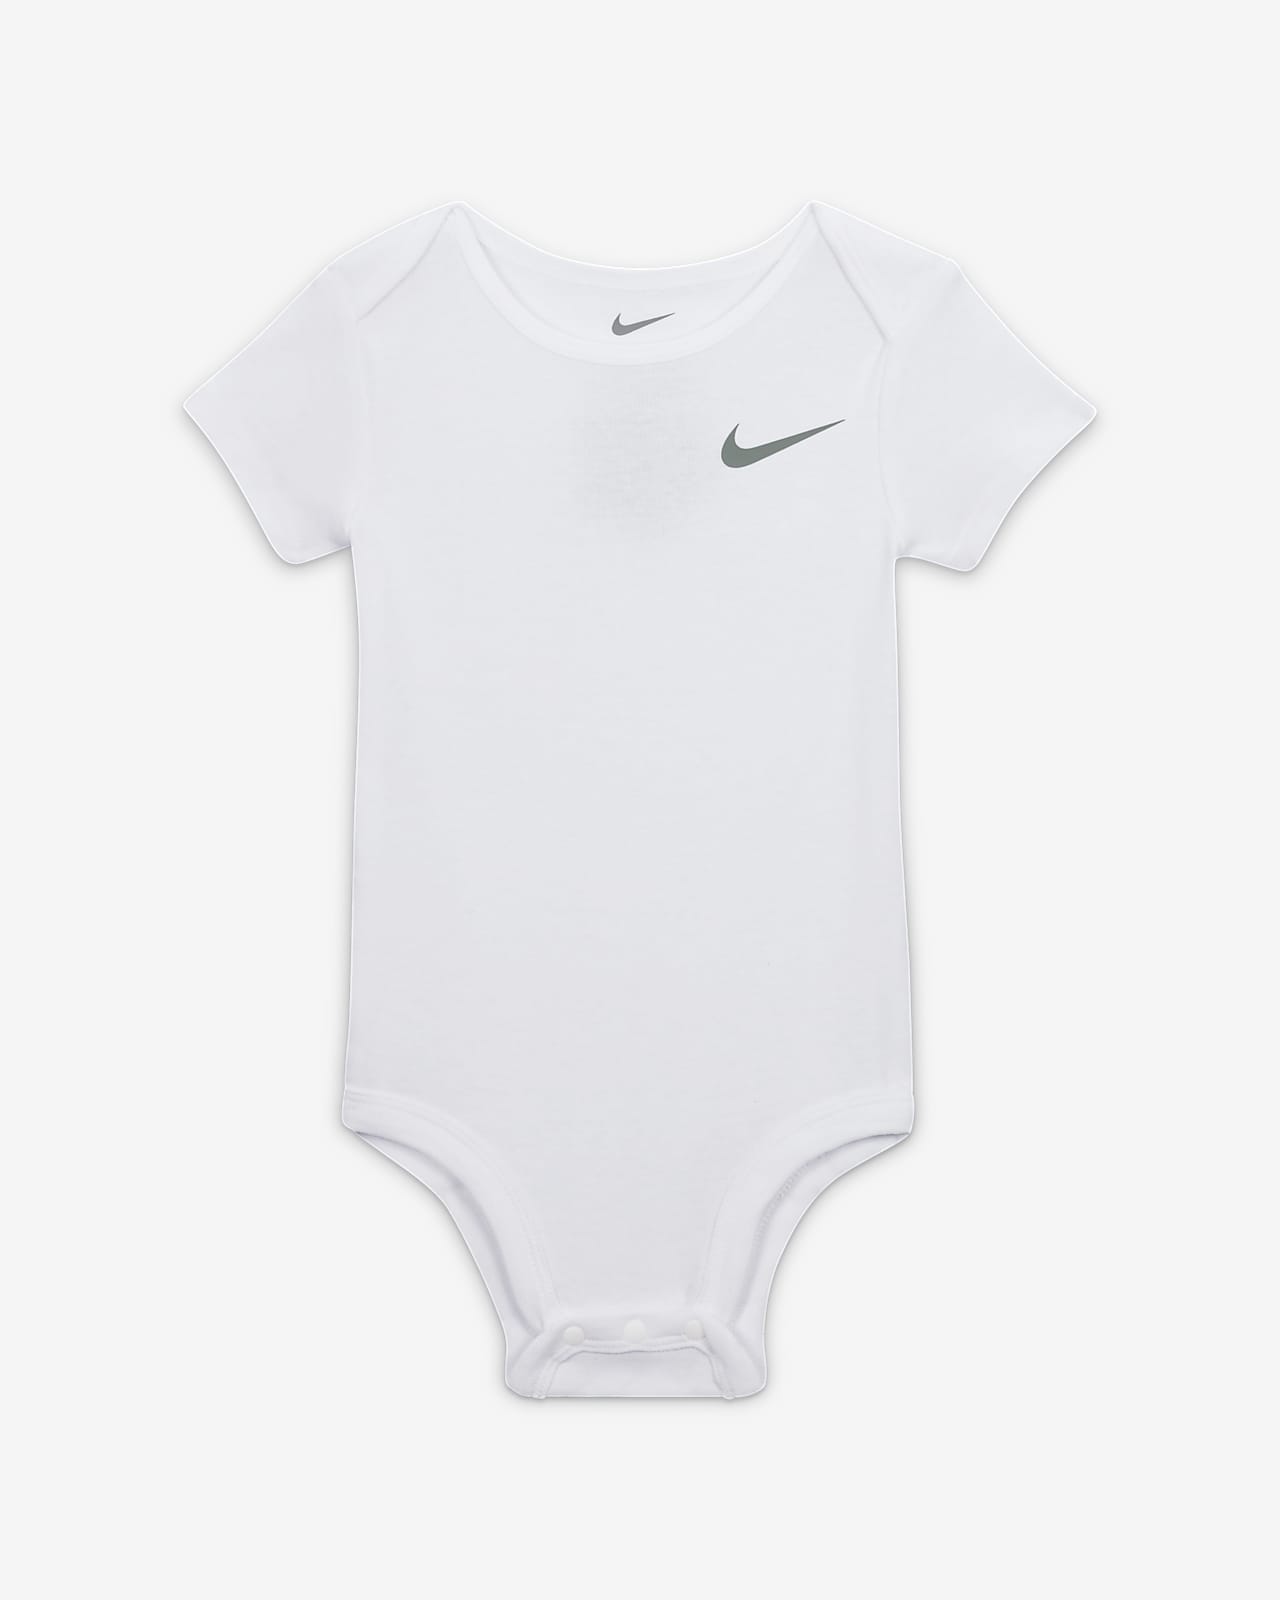  Nike Baby Boy 3 Piece Camo Set, Jogger Pants, Zip-Up Jacket and  Bodysuit (NB): Clothing, Shoes & Jewelry